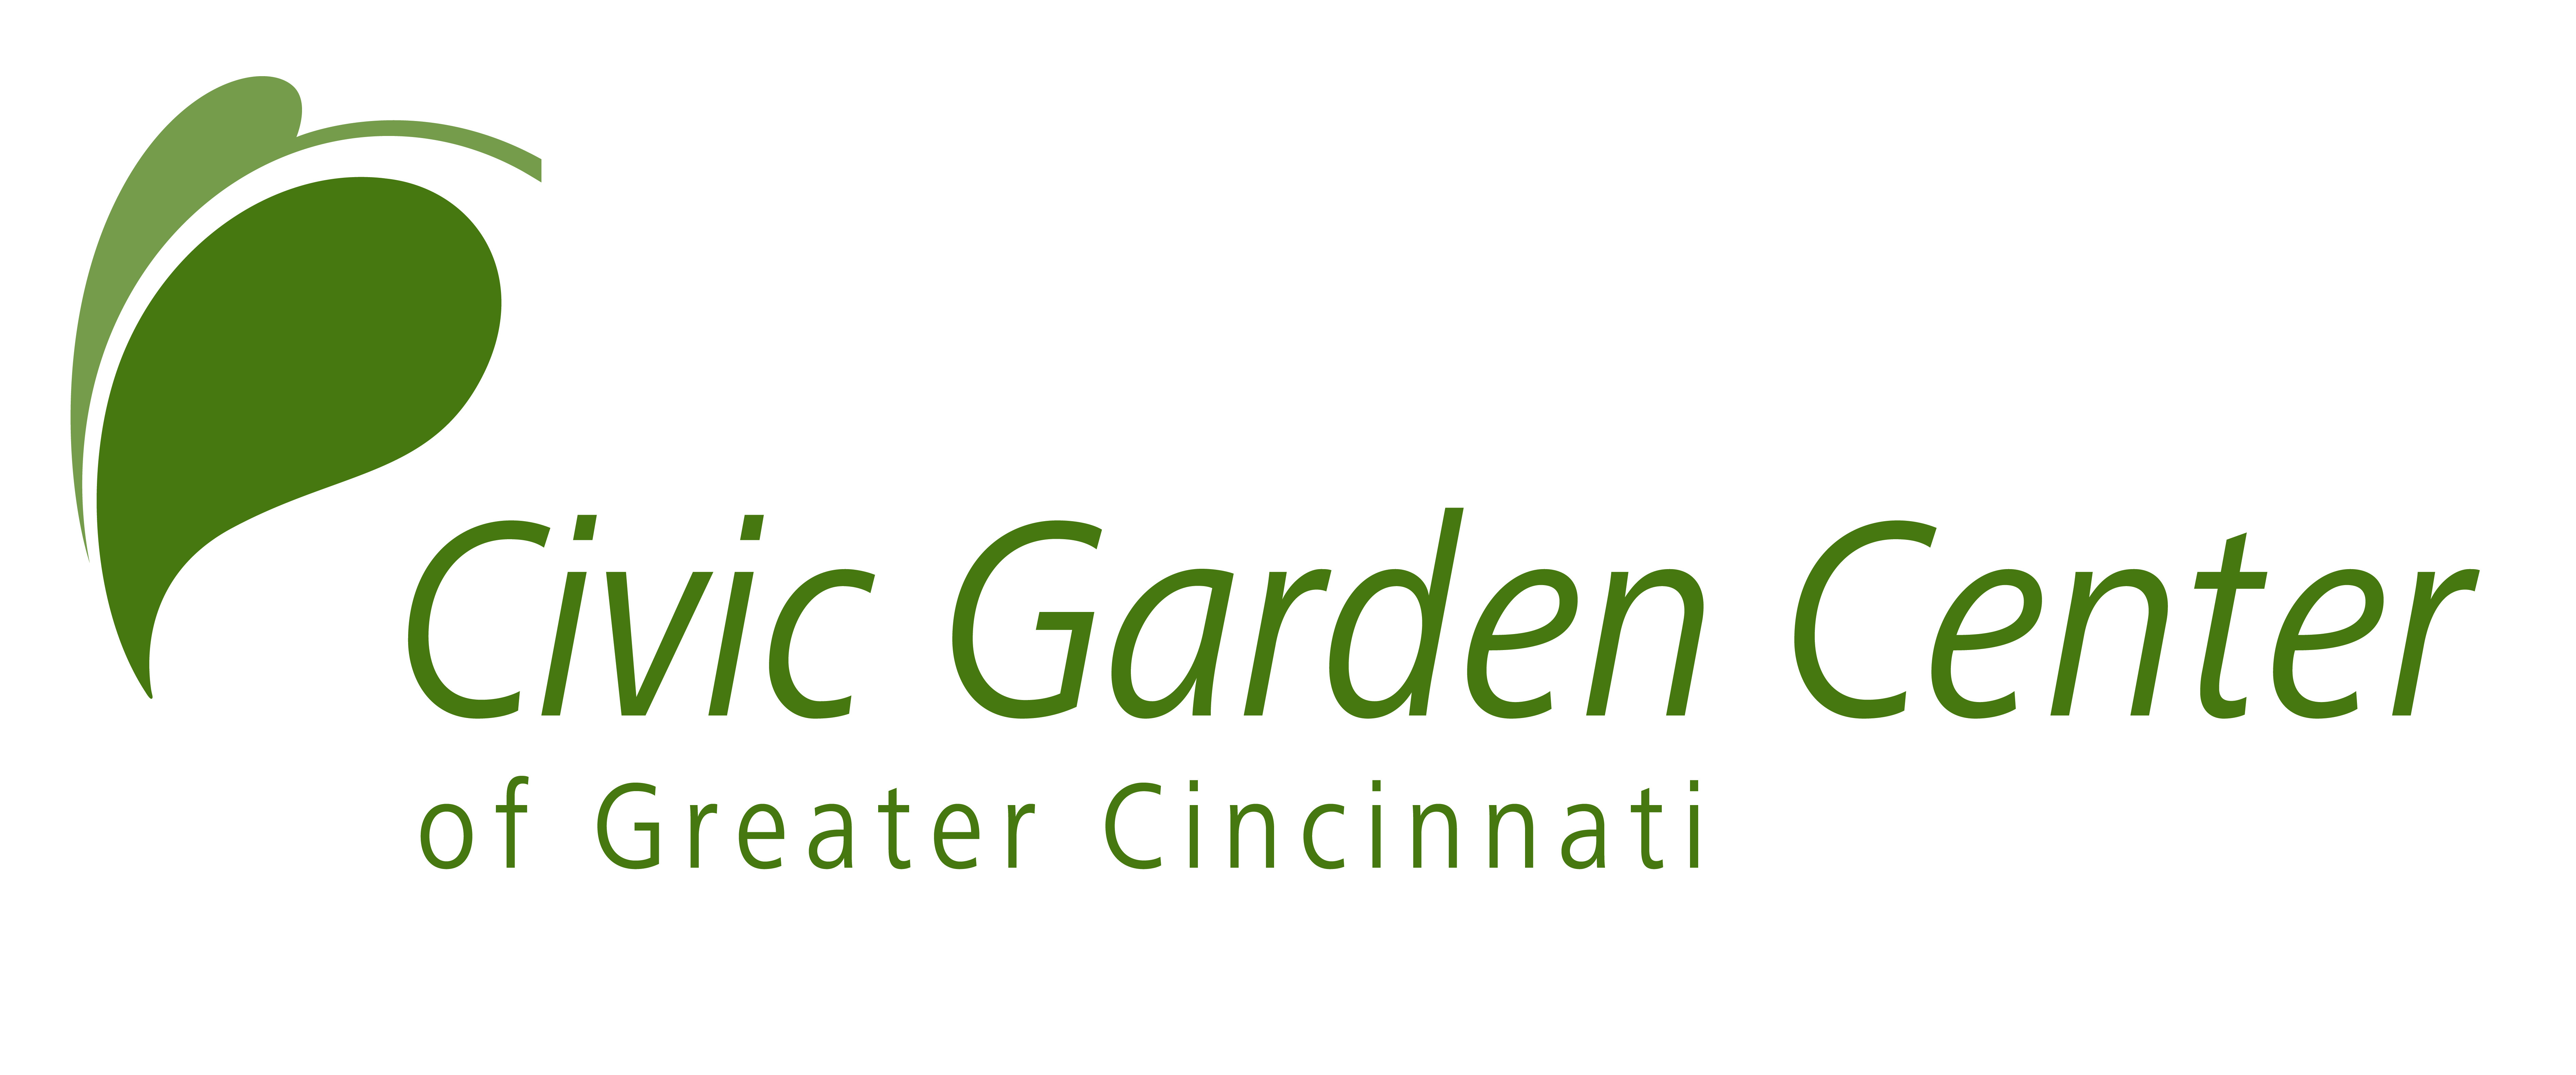 Civic Garden Center Of Greater Cincinnati Artswave Guide A